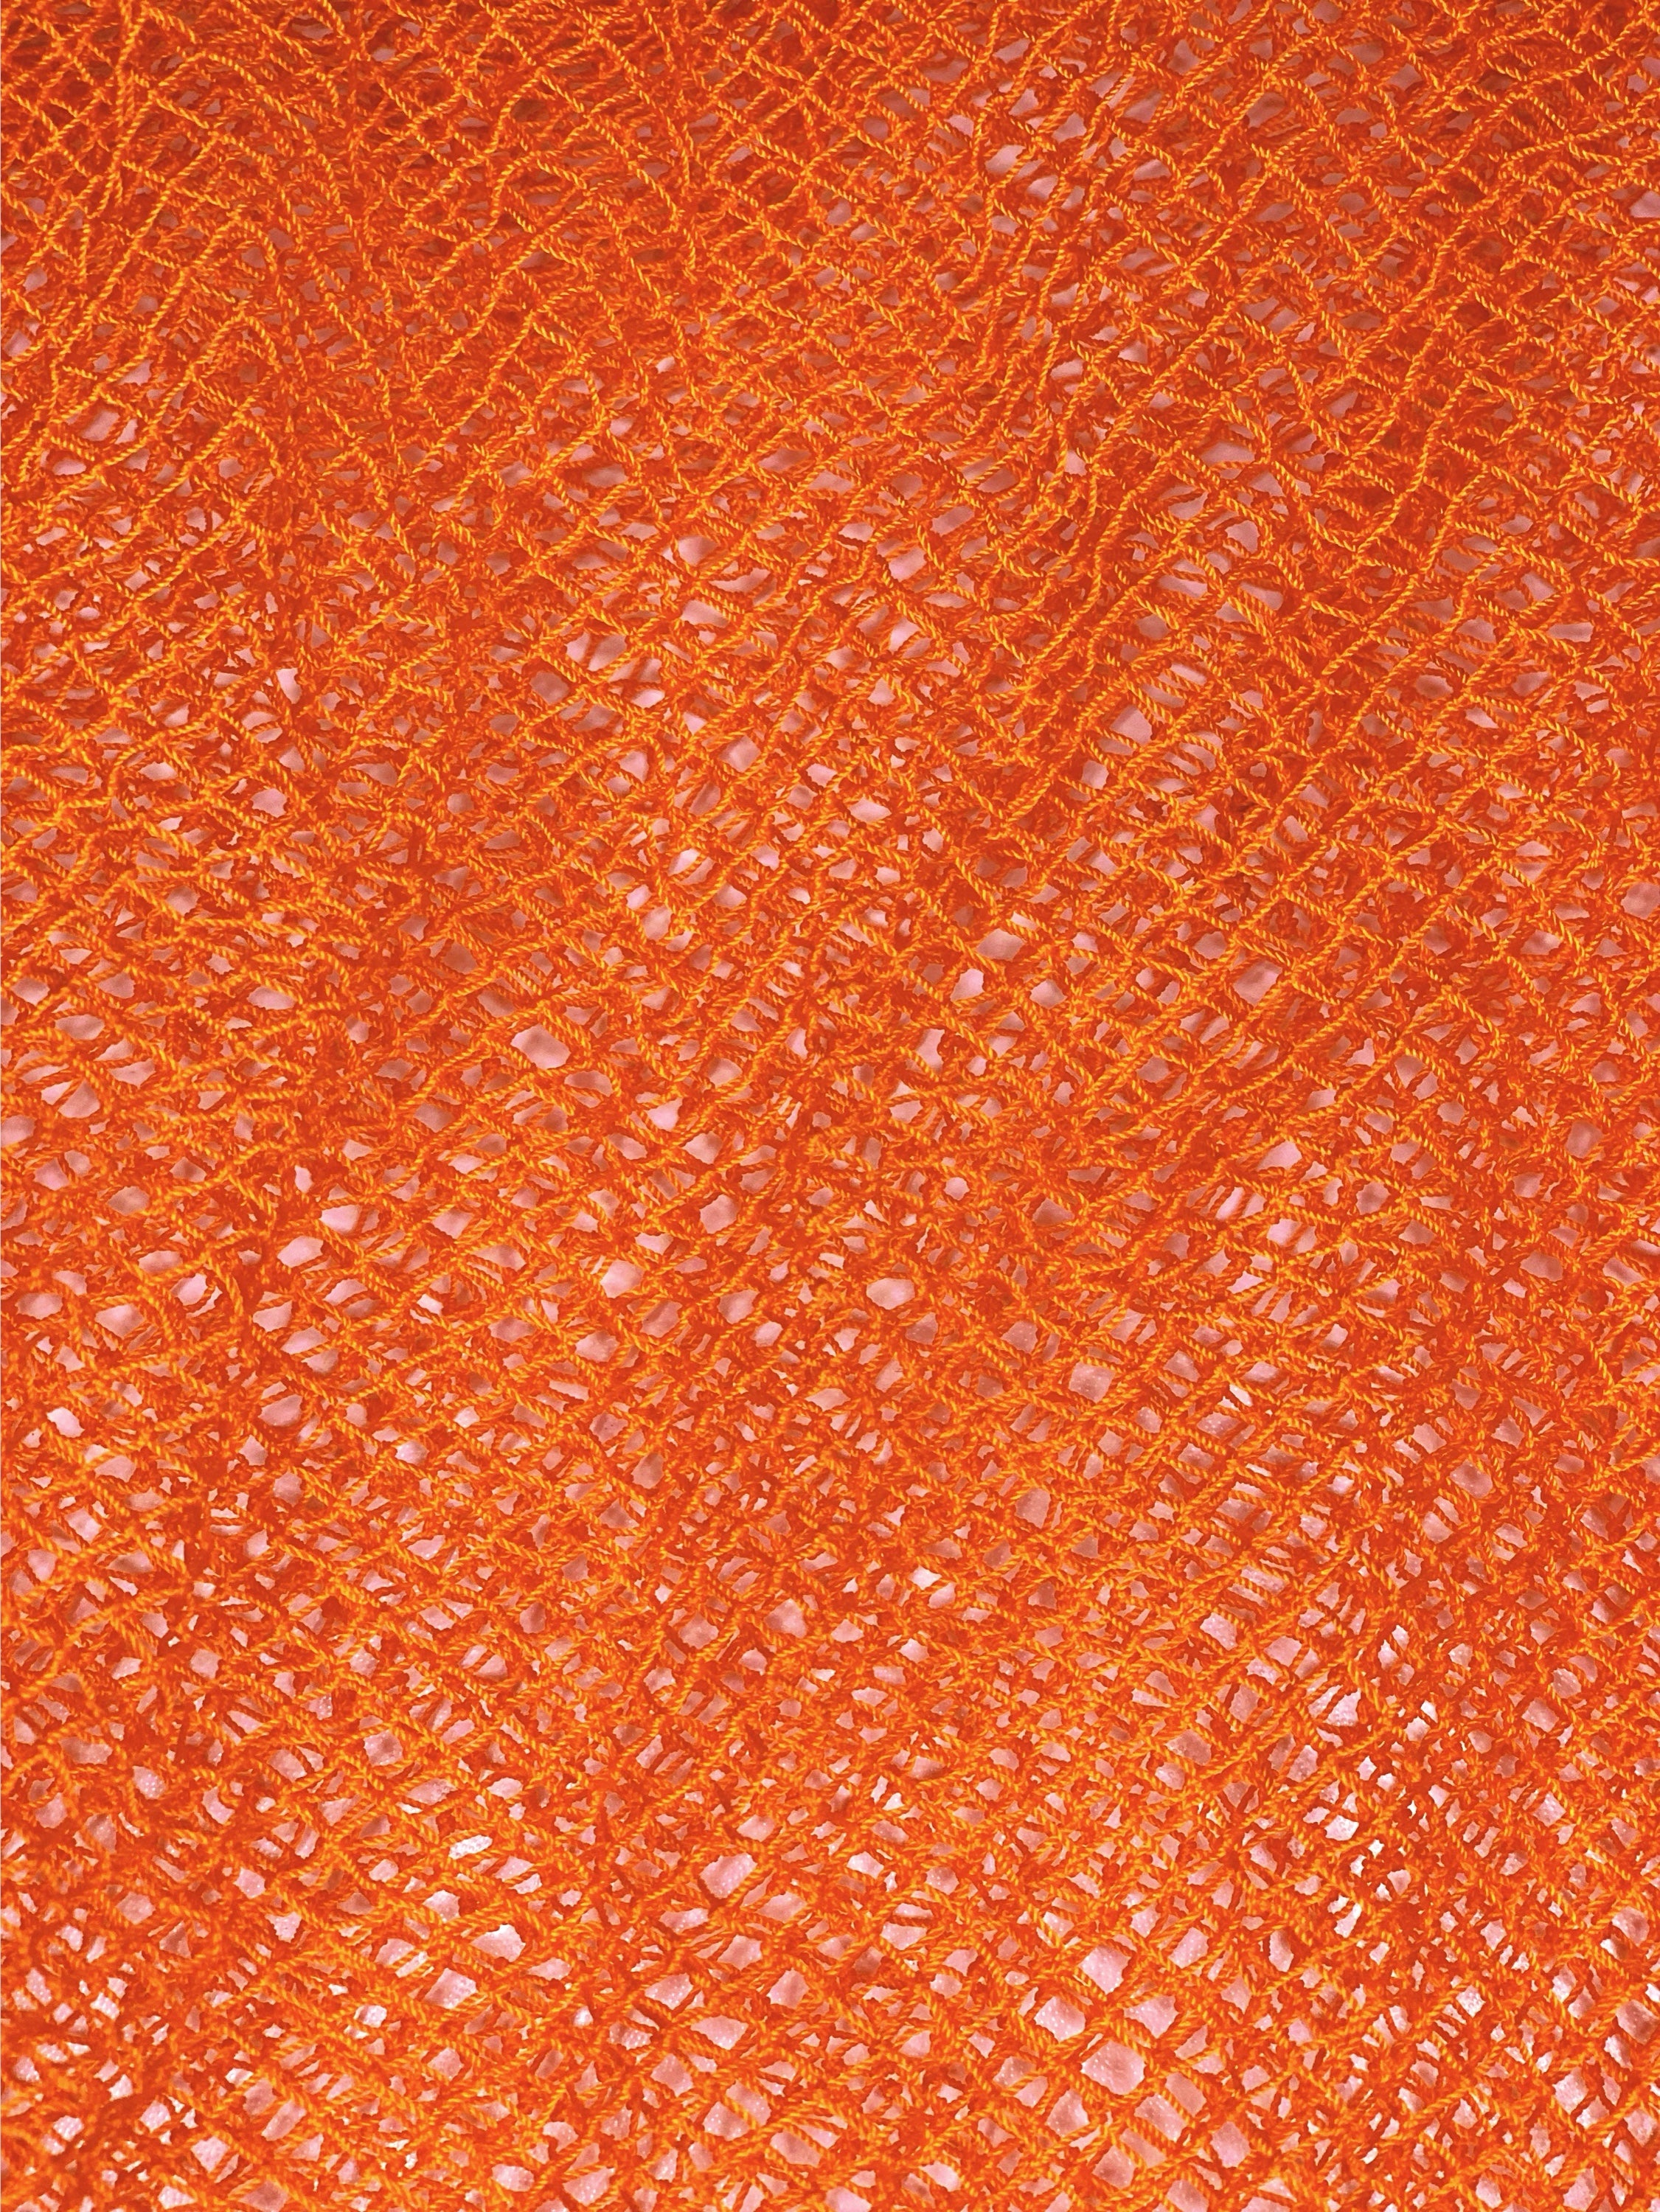 African Exfoliating Sponges Orange - Classybaya 